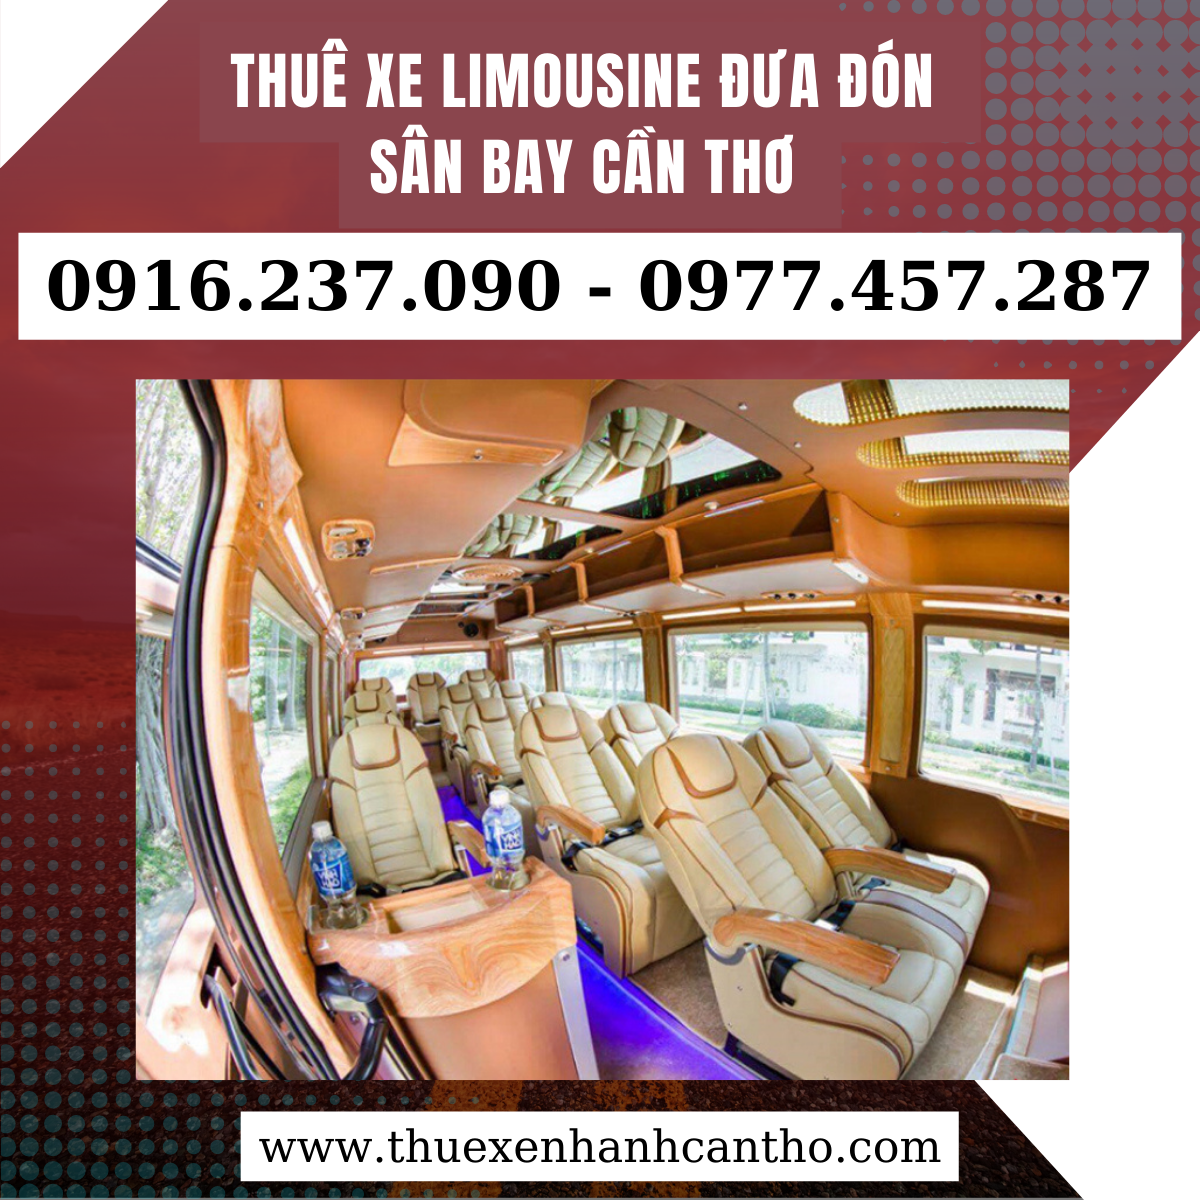 thue-xe-limousine-dua-don-san-bay-can-tho